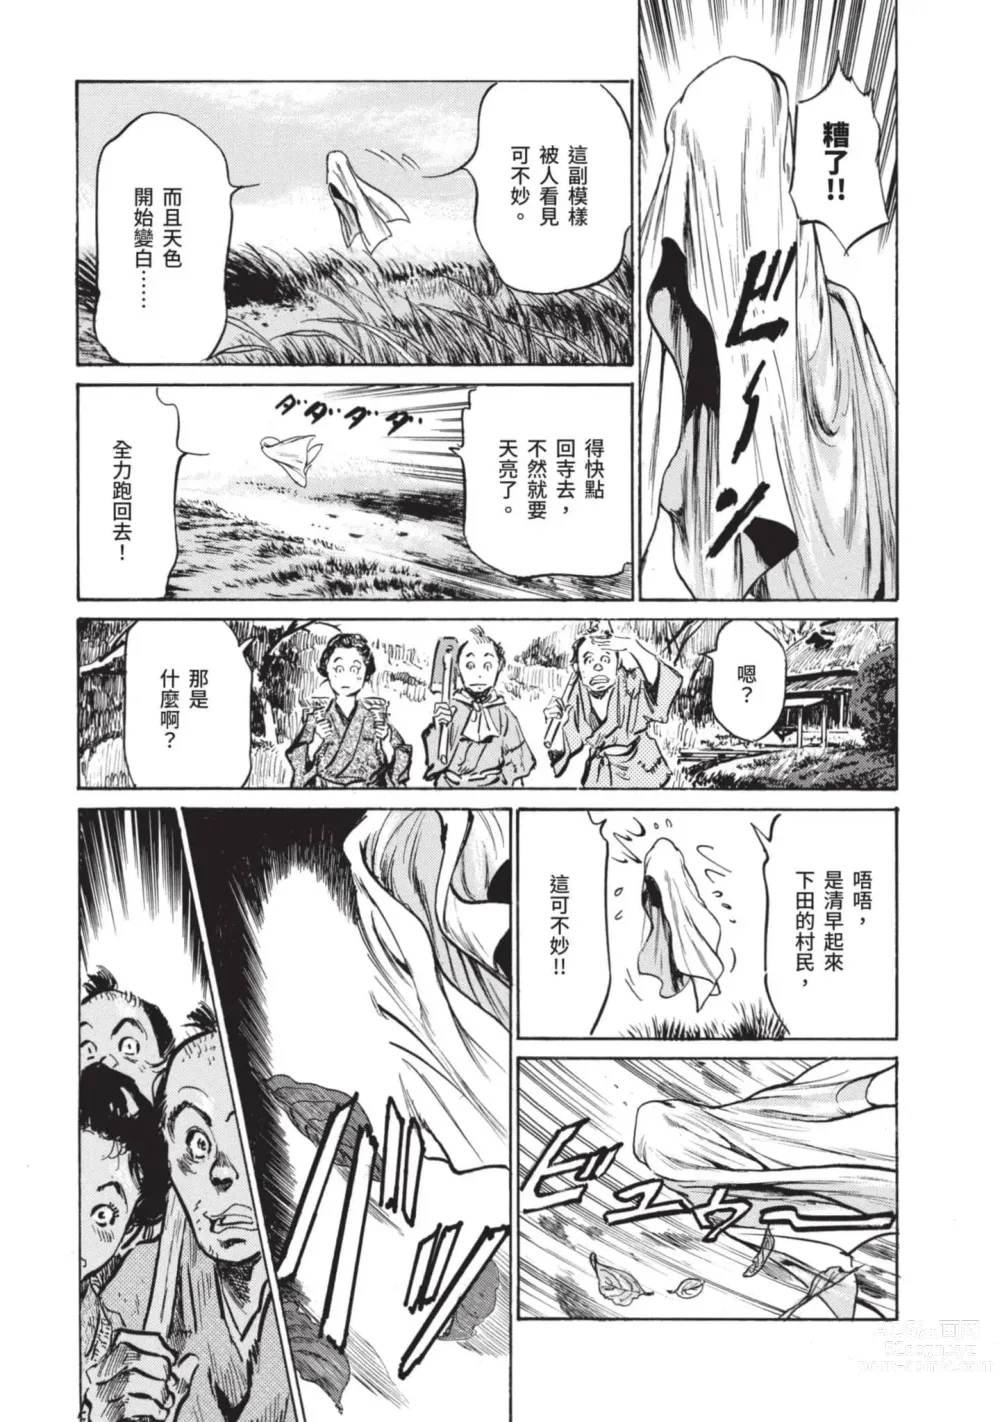 Page 154 of manga Inshuu Hiroku Midare Mandara 2